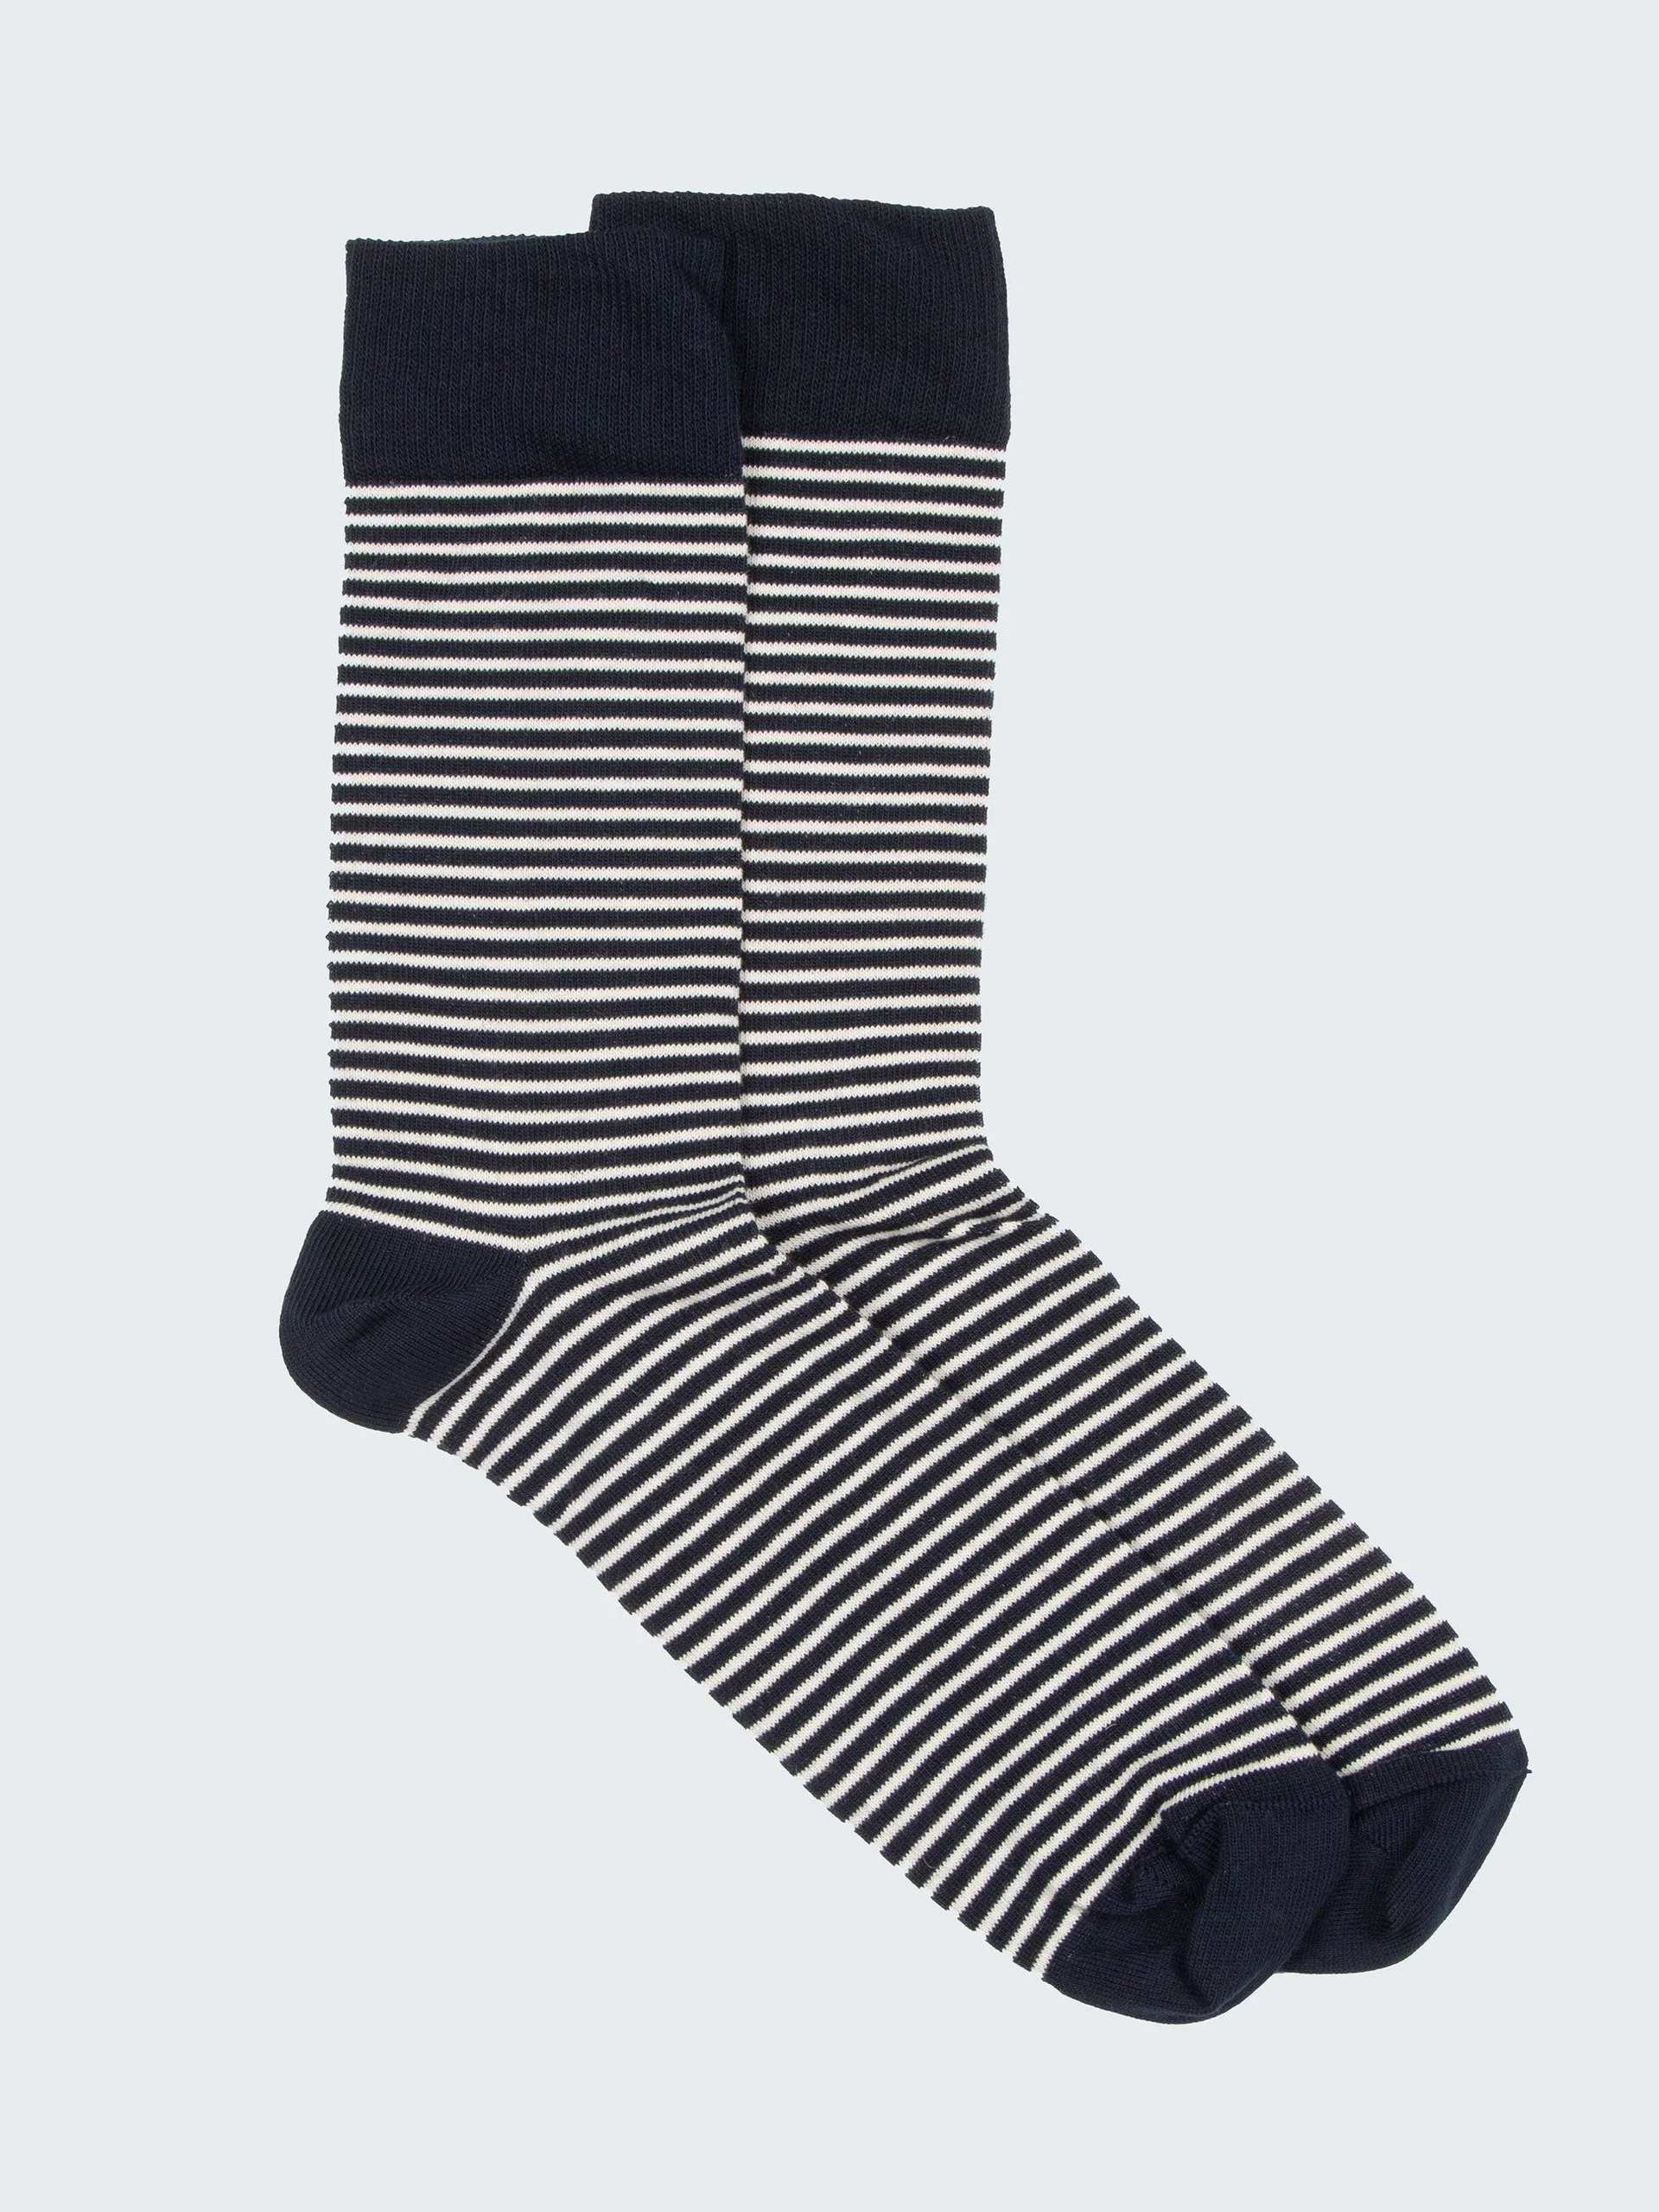 Organic cotton blend socks in navy stripe